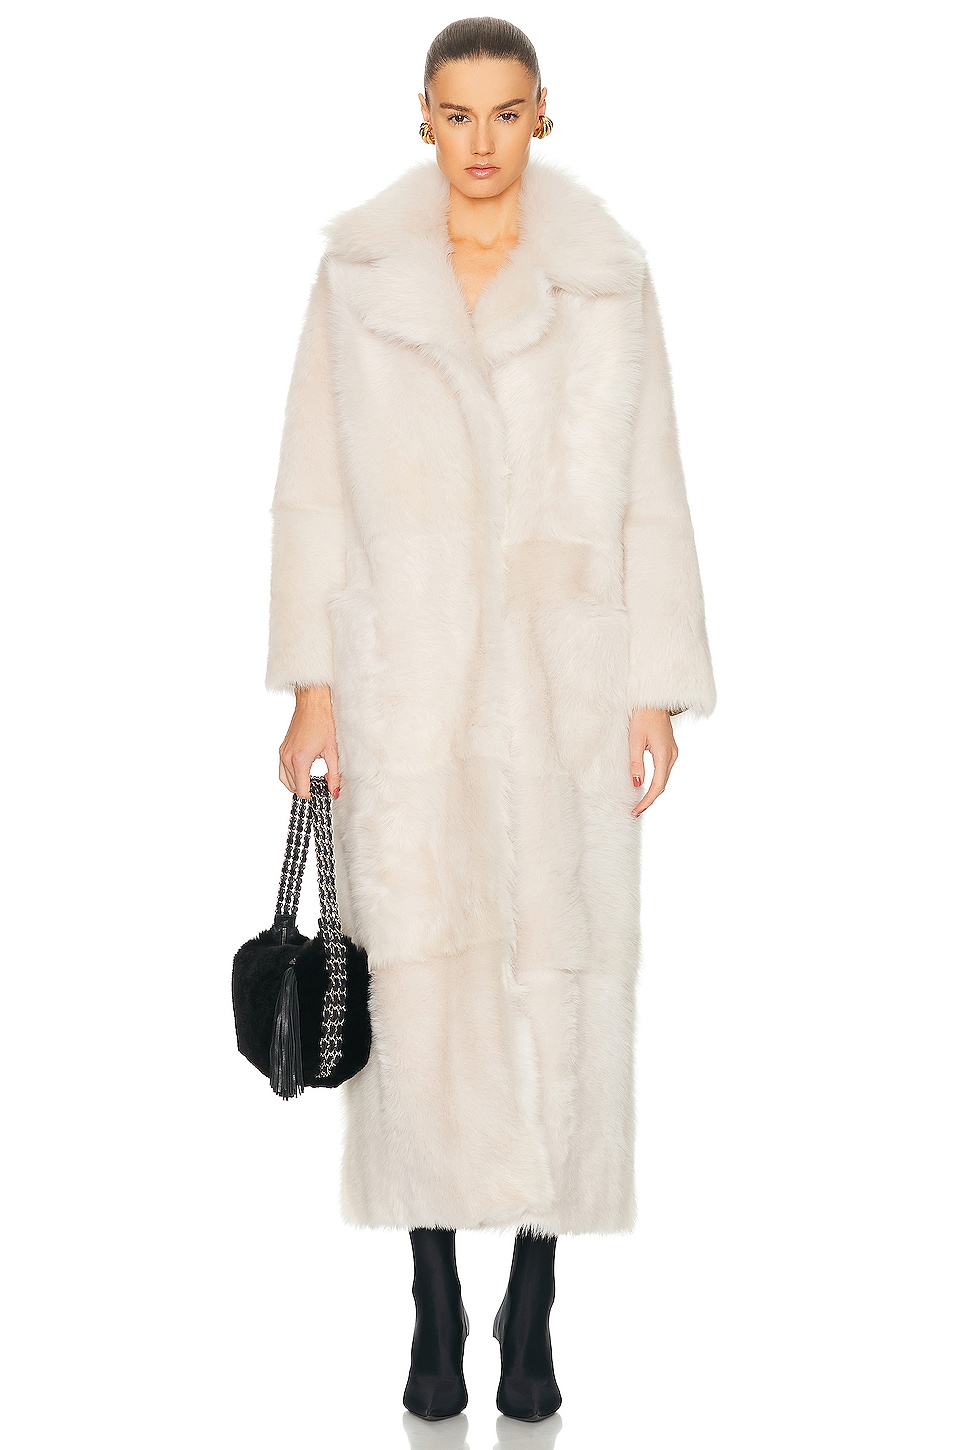 Image 1 of NOUR HAMMOUR For FWRD Evita Extra Long Coat in Cloud